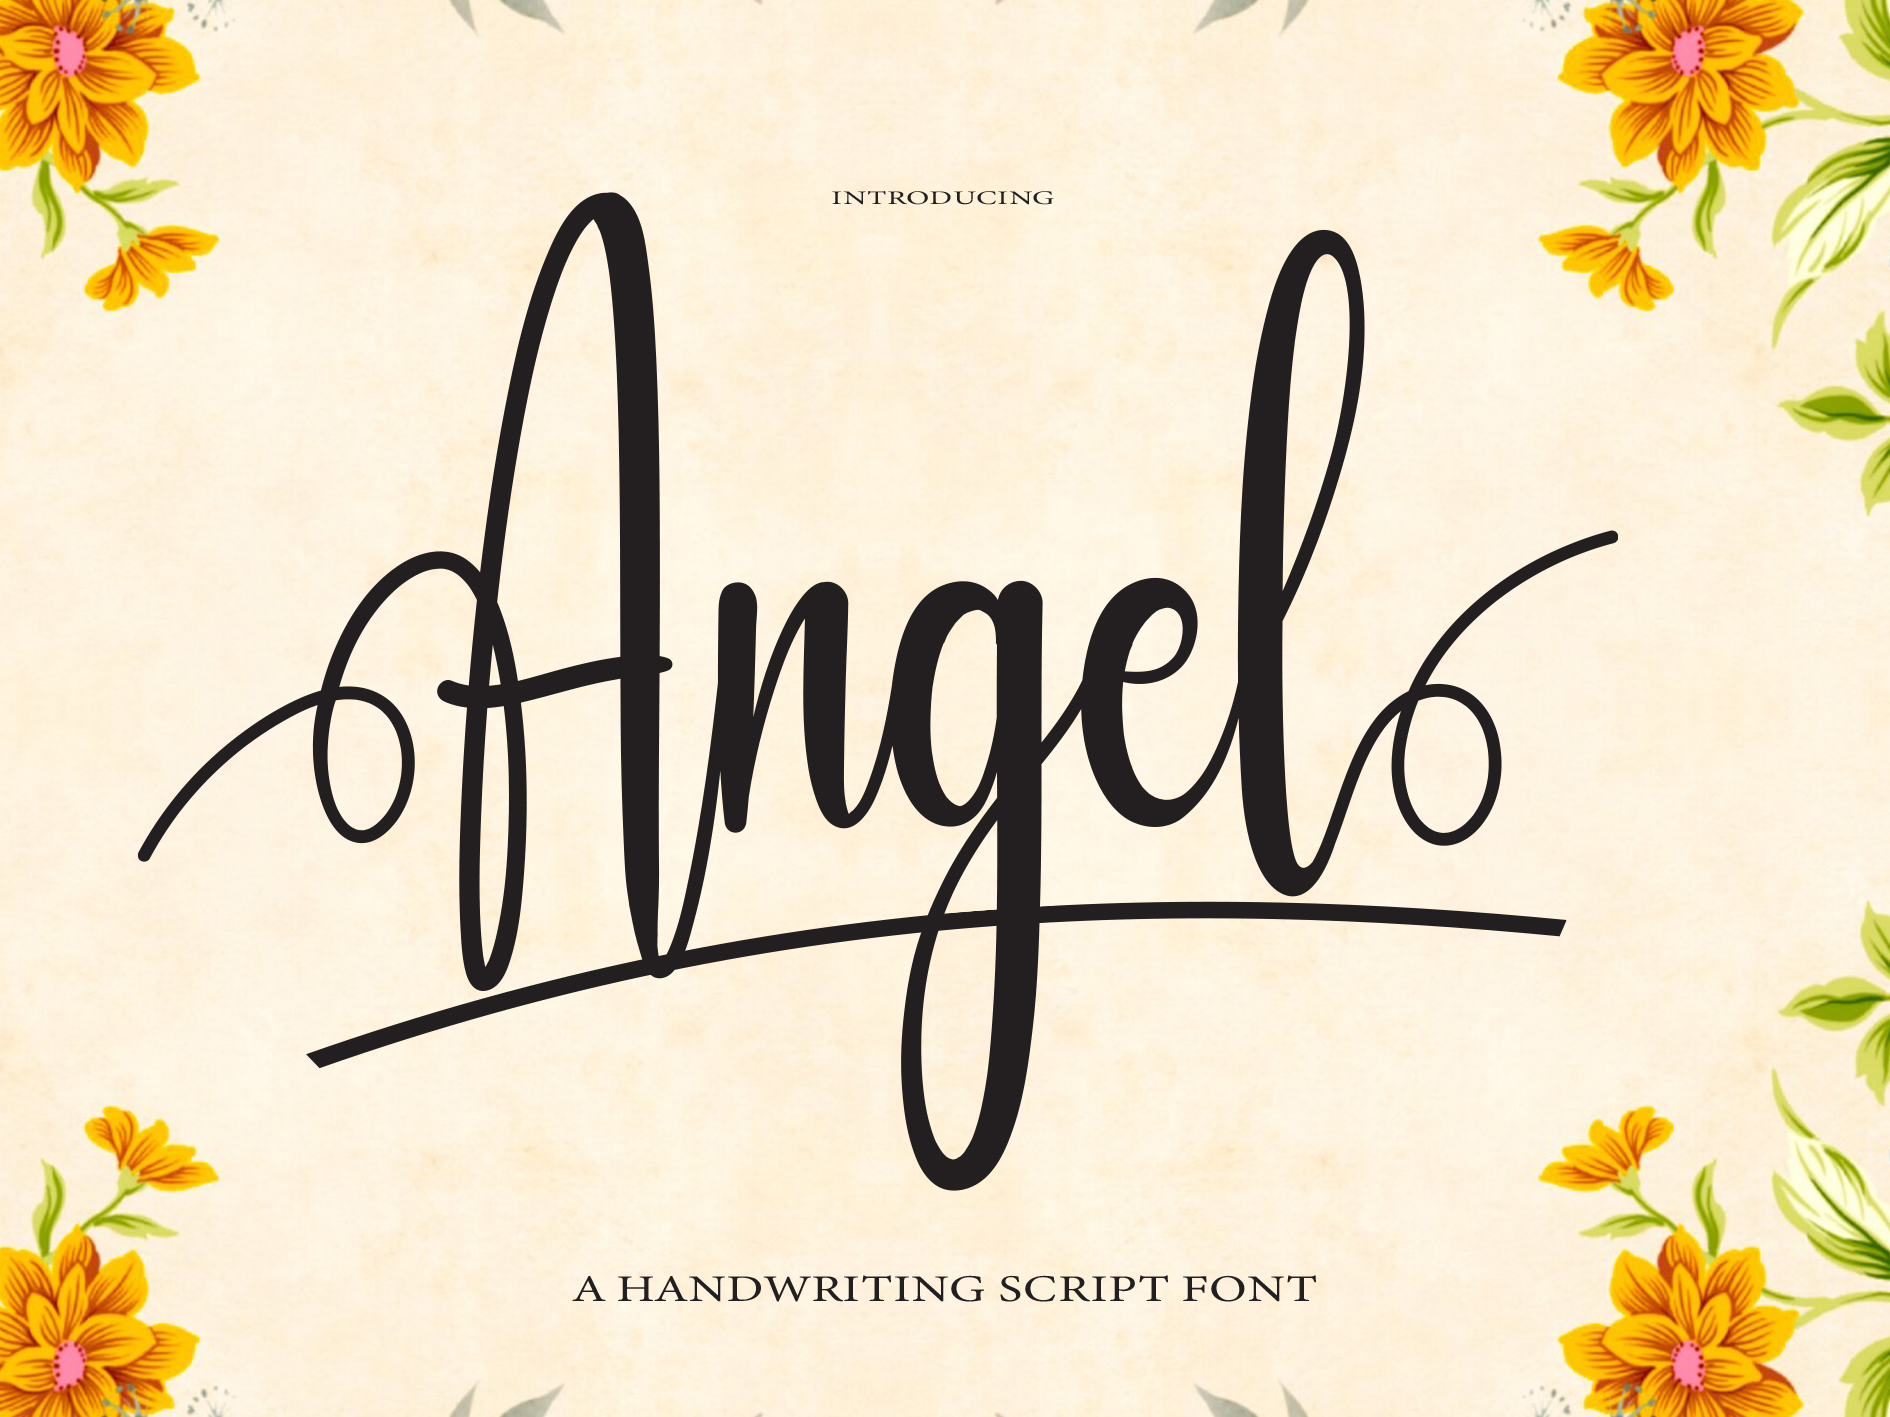 Fallen Angel  tattoo script free scetch